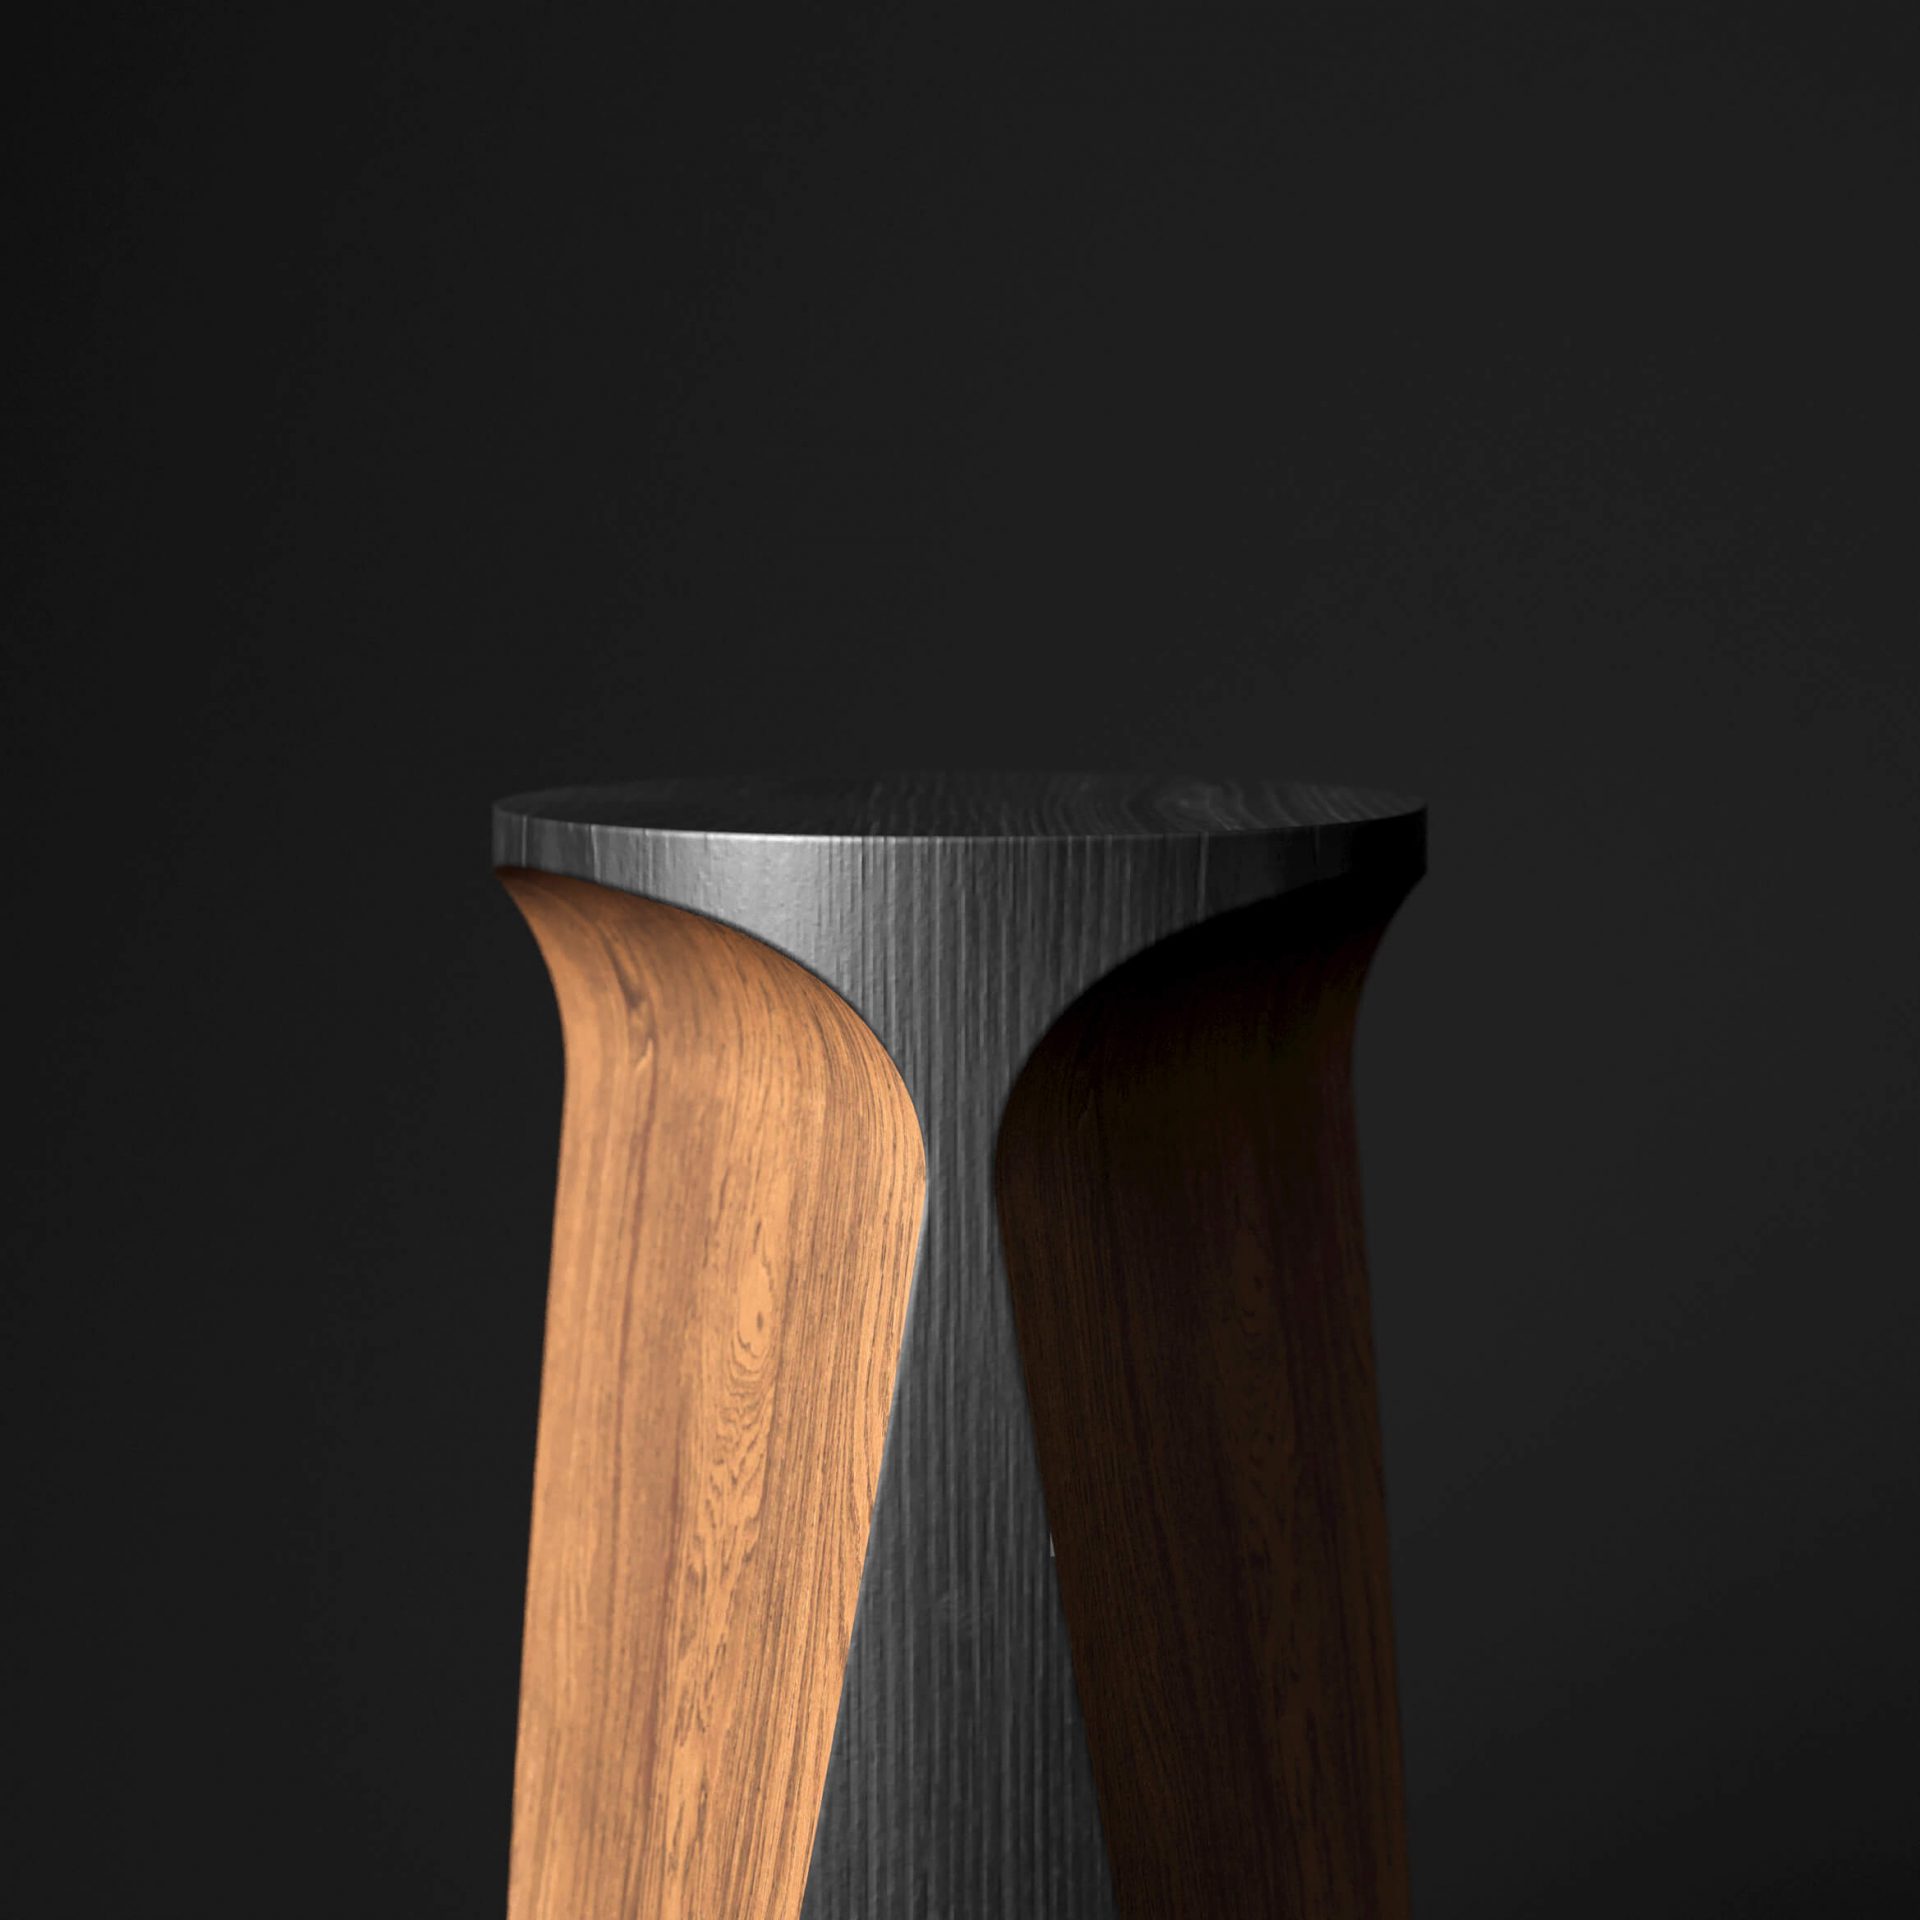 Deniz Aktay - wooden shape black